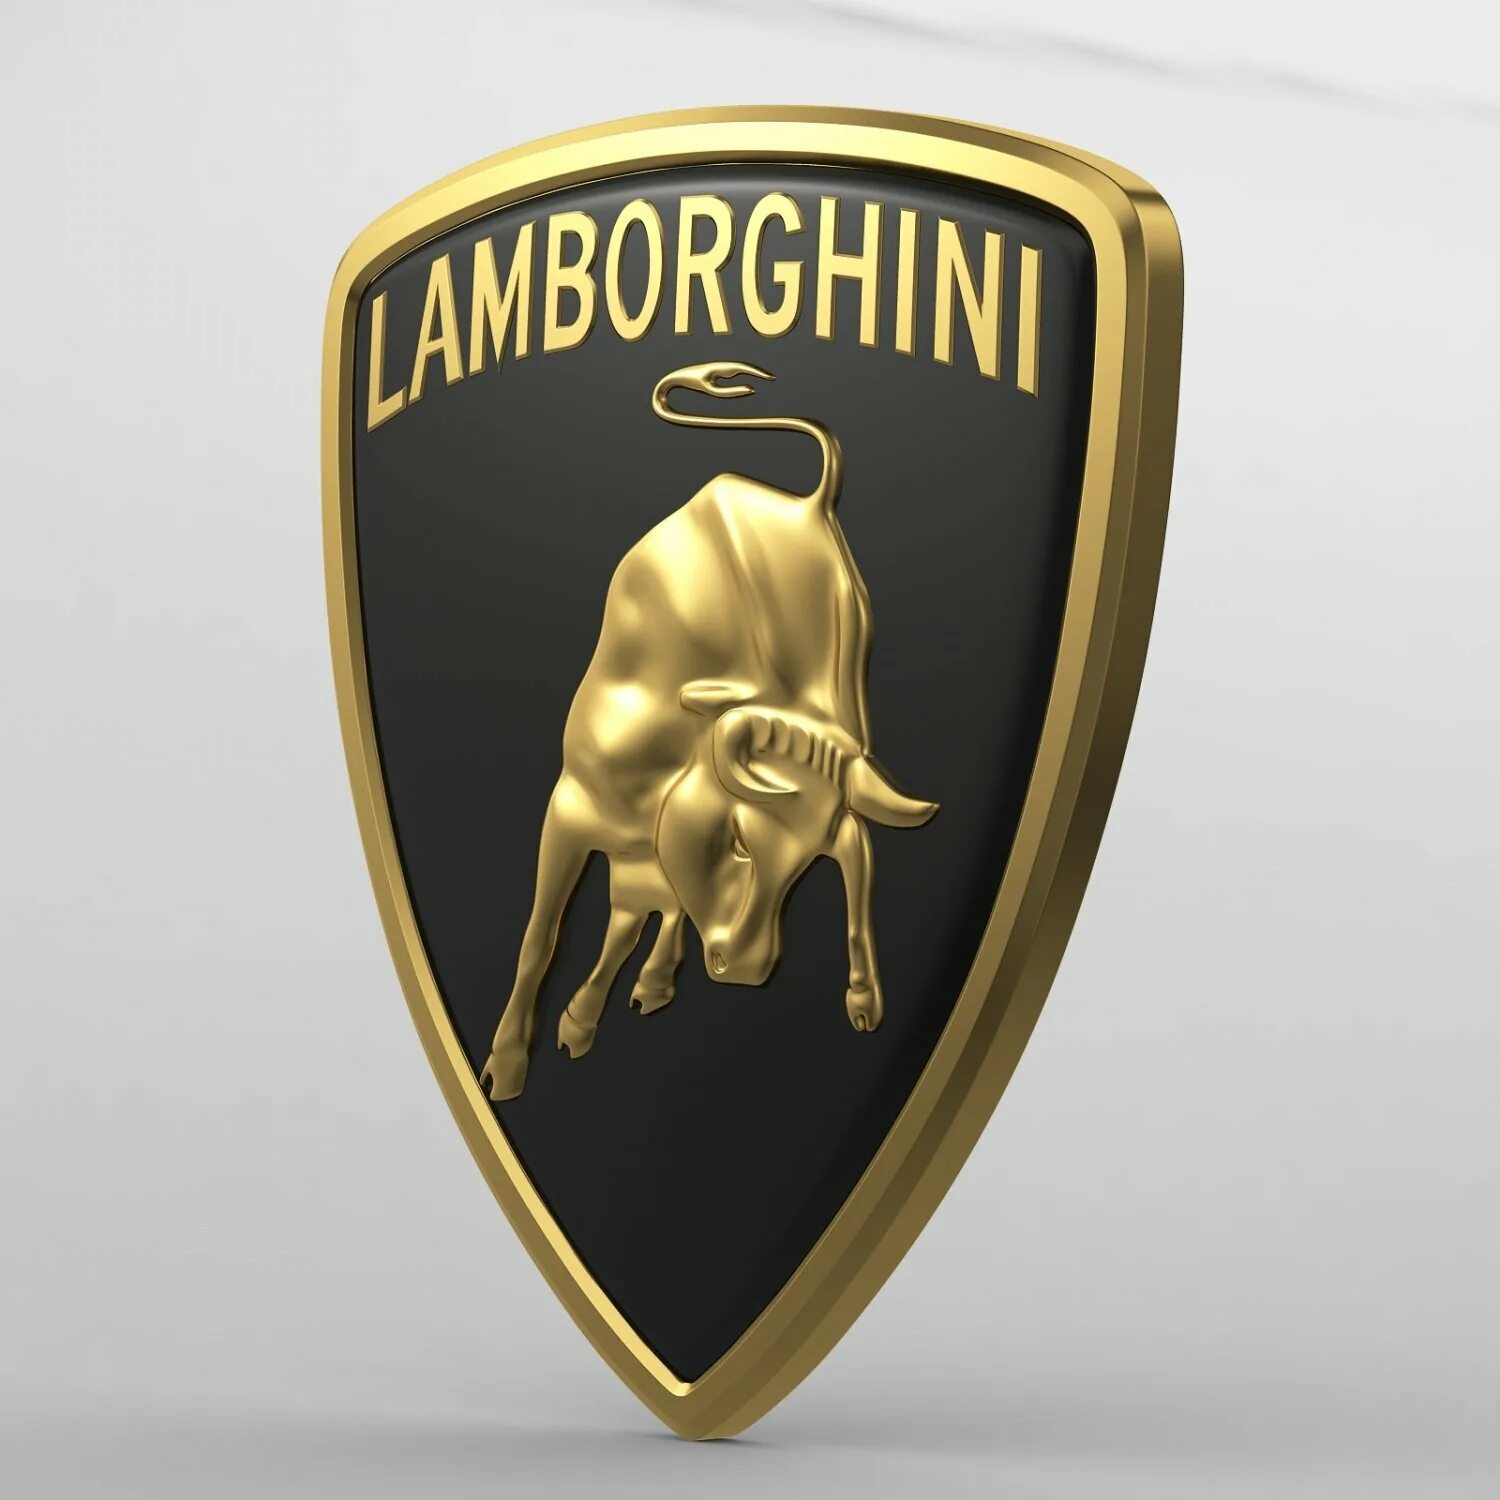 Ламба значок. Значок Ламборгини. Марка Lamborghini. Фирменный знак Ламборджини. Ламборгини шильдик.